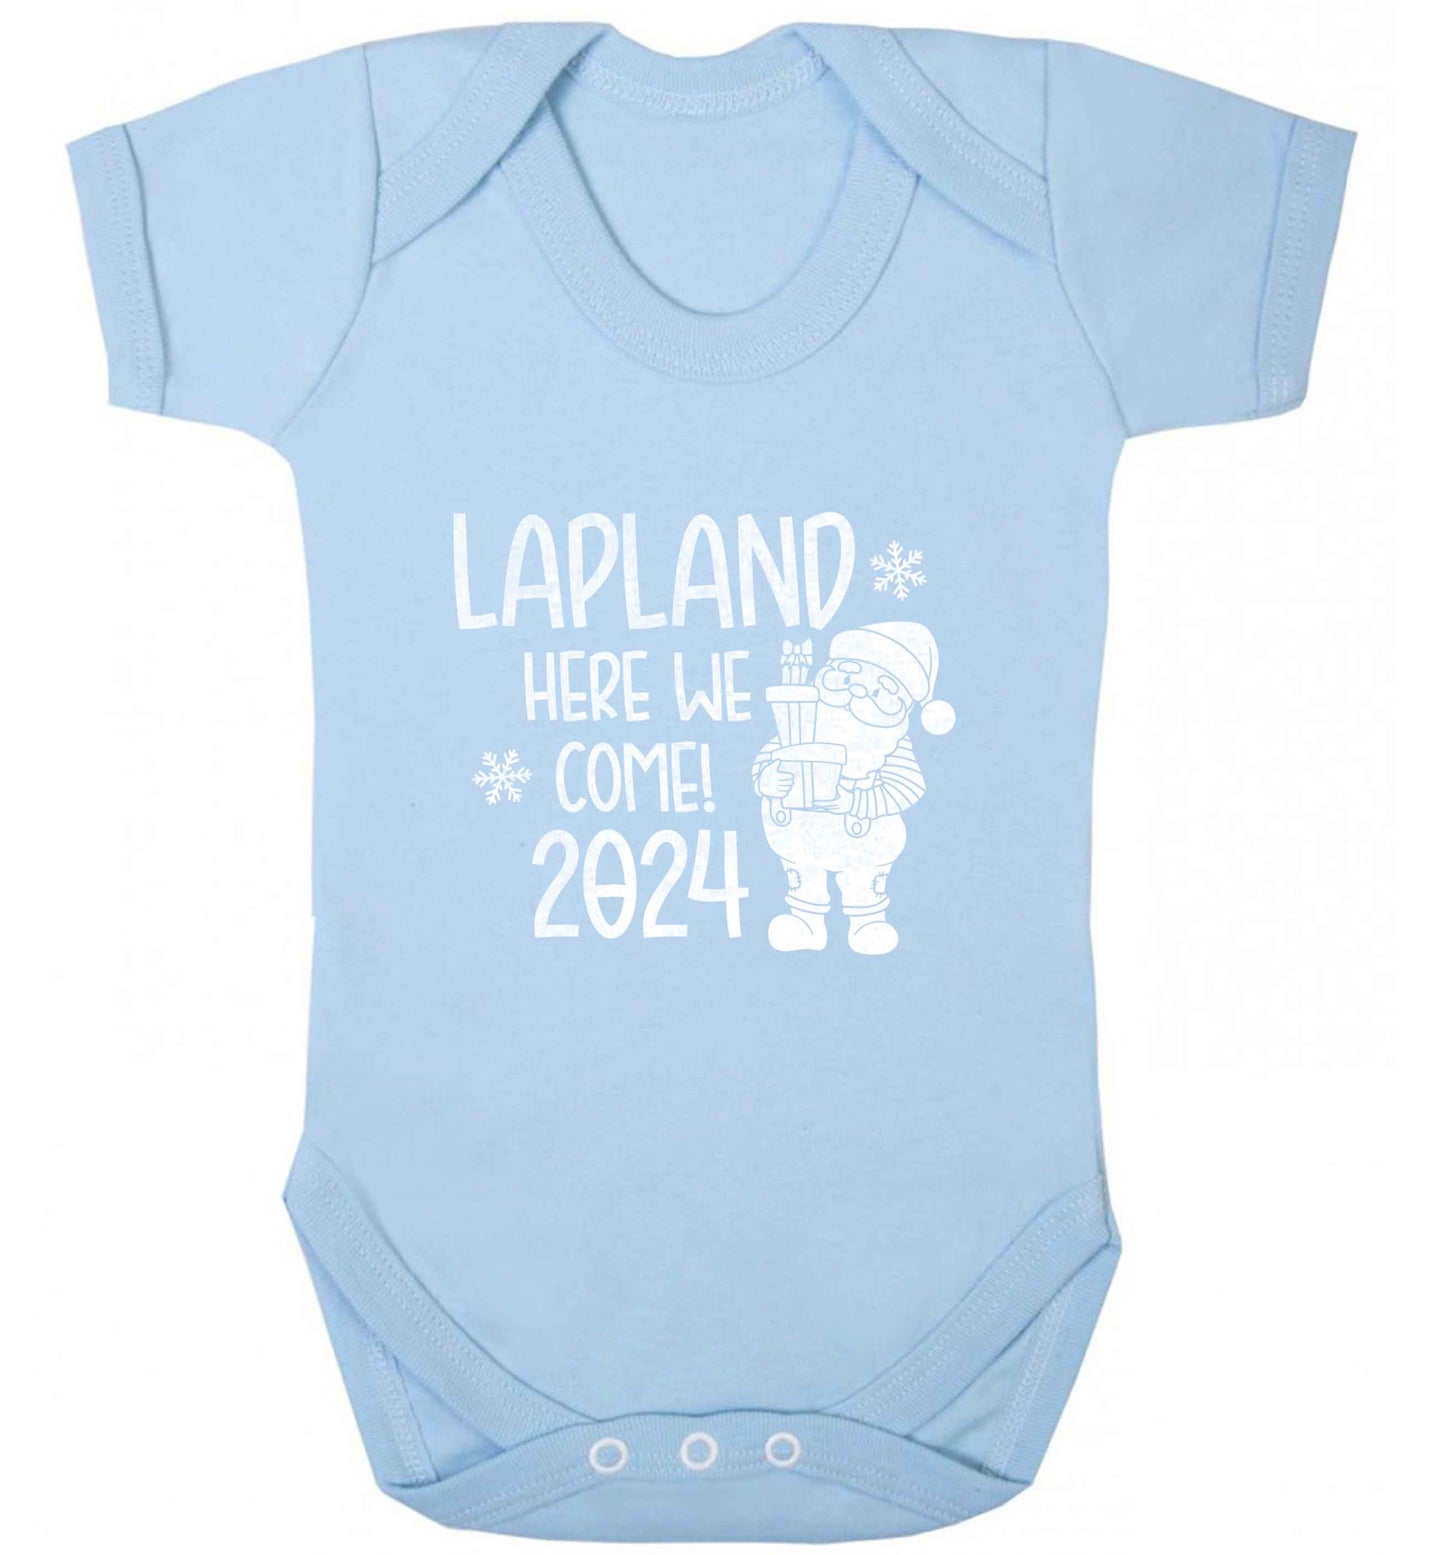 Lapland here we come baby vest pale blue 18-24 months